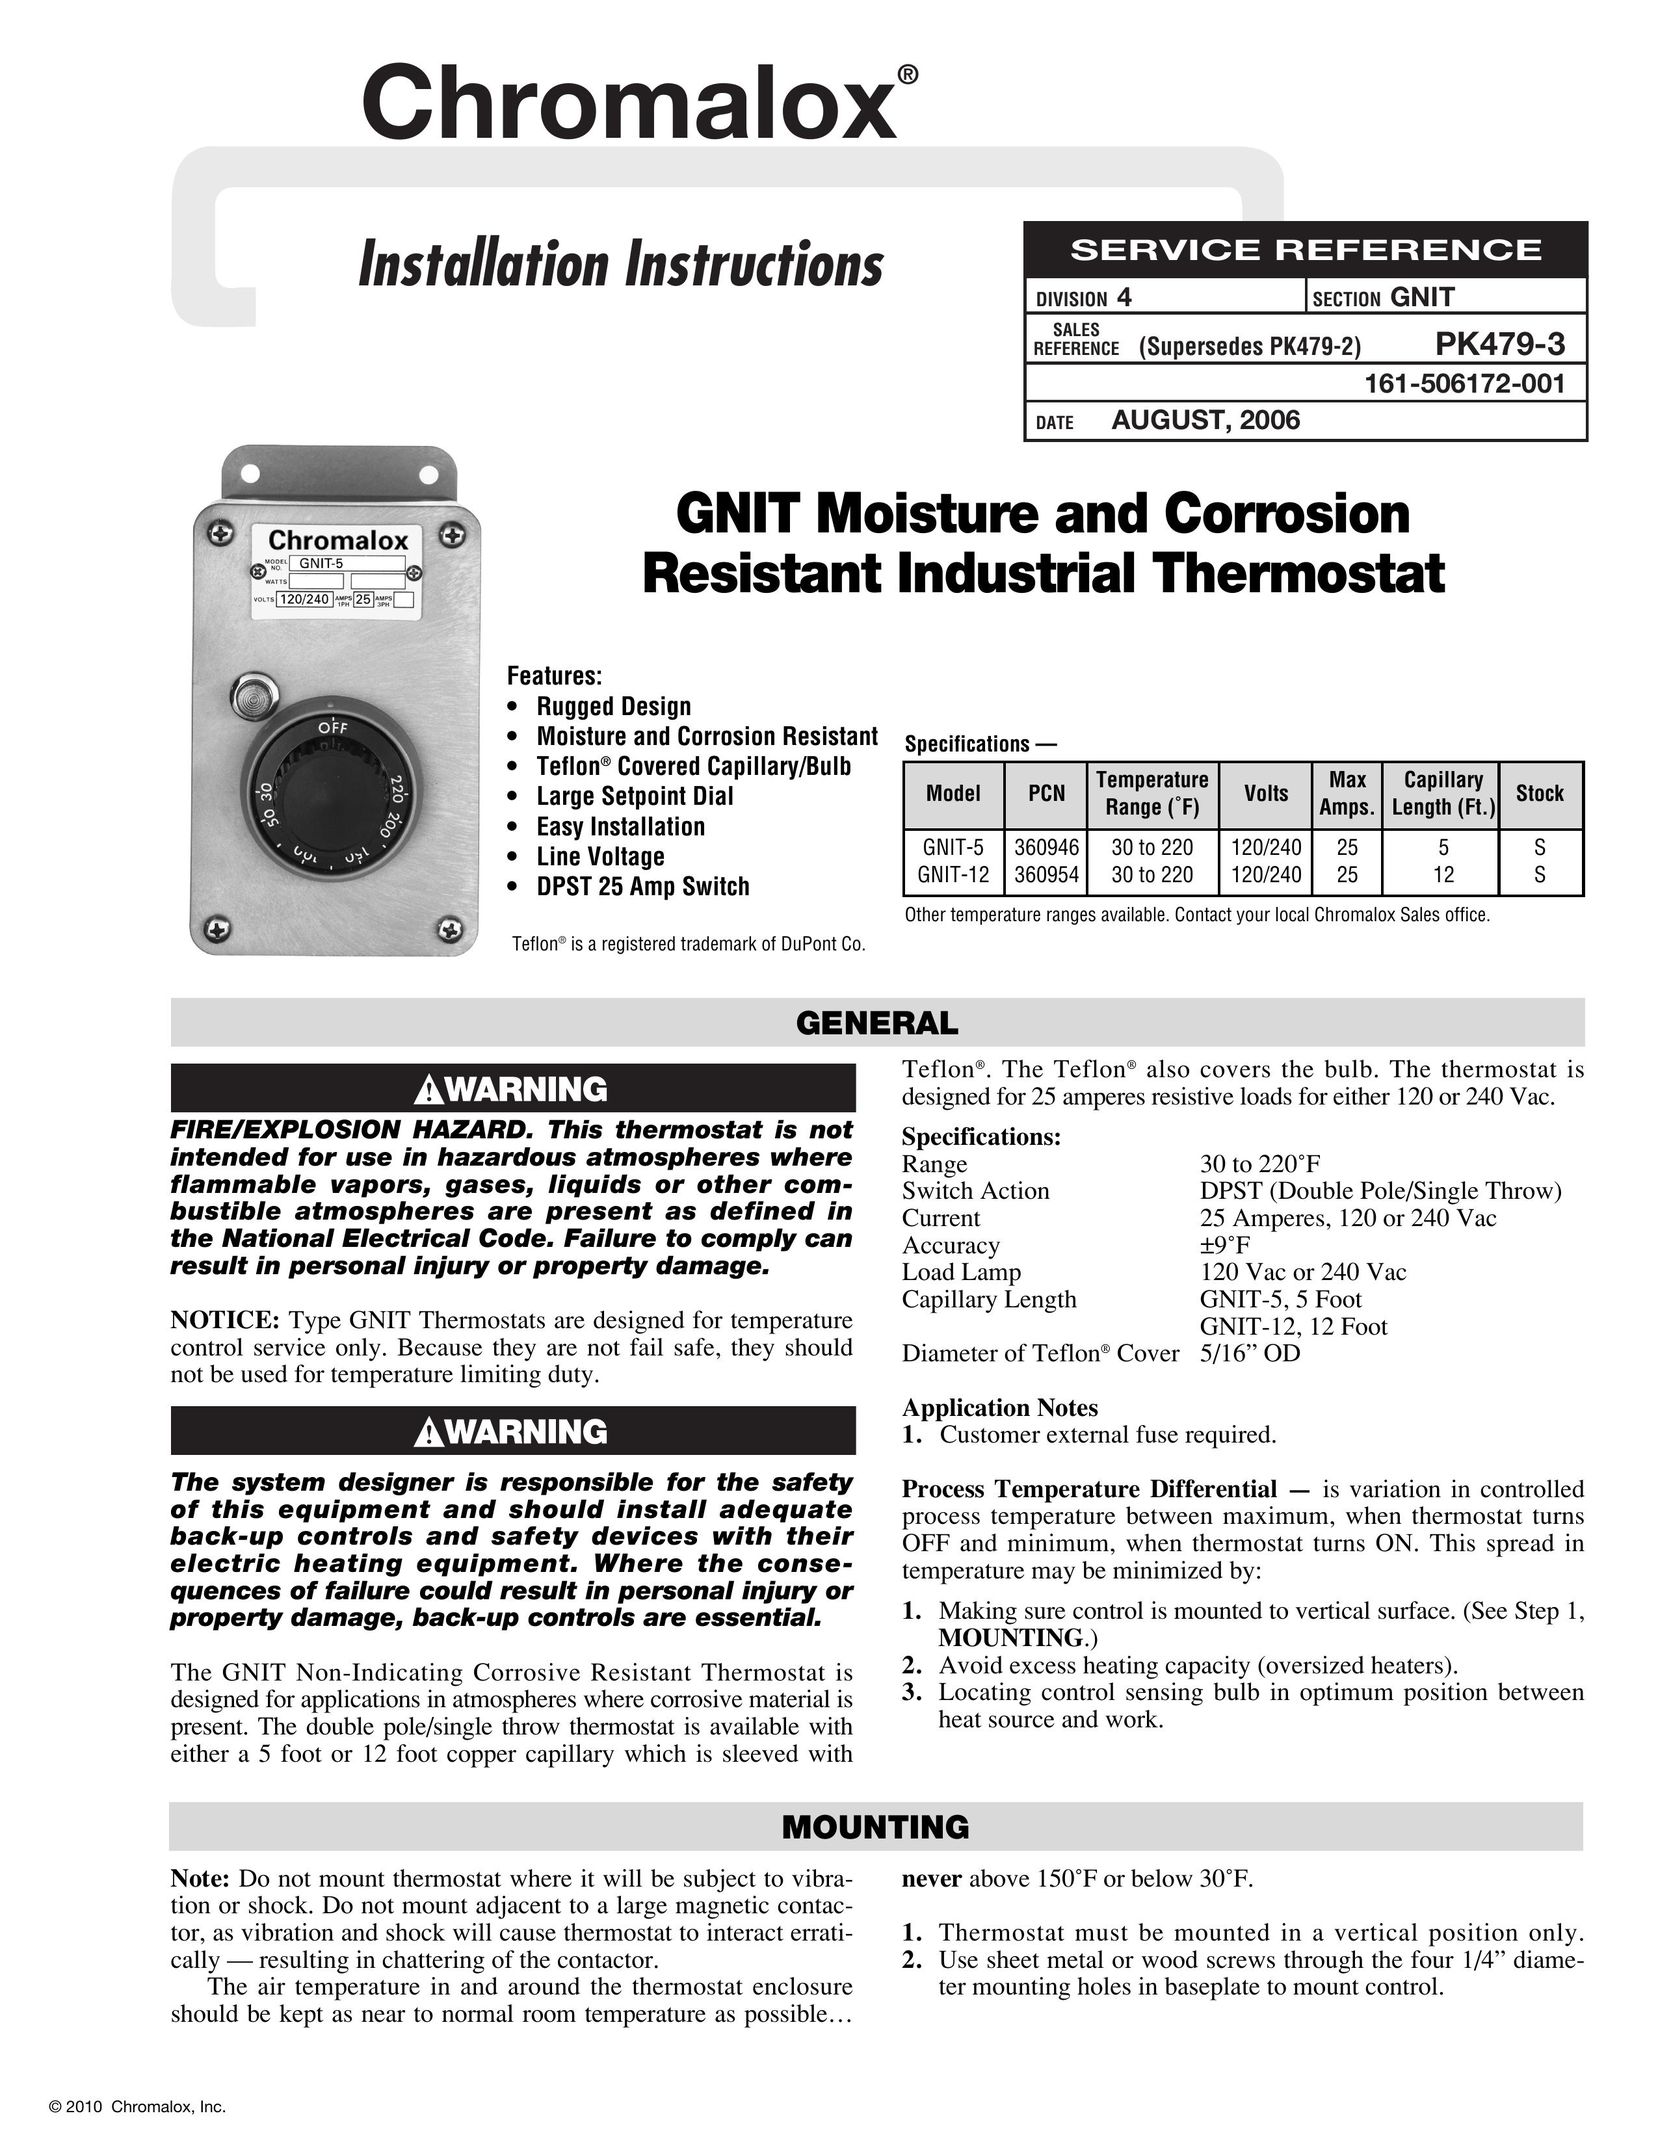 Chromalox GNIT-5 Thermostat User Manual